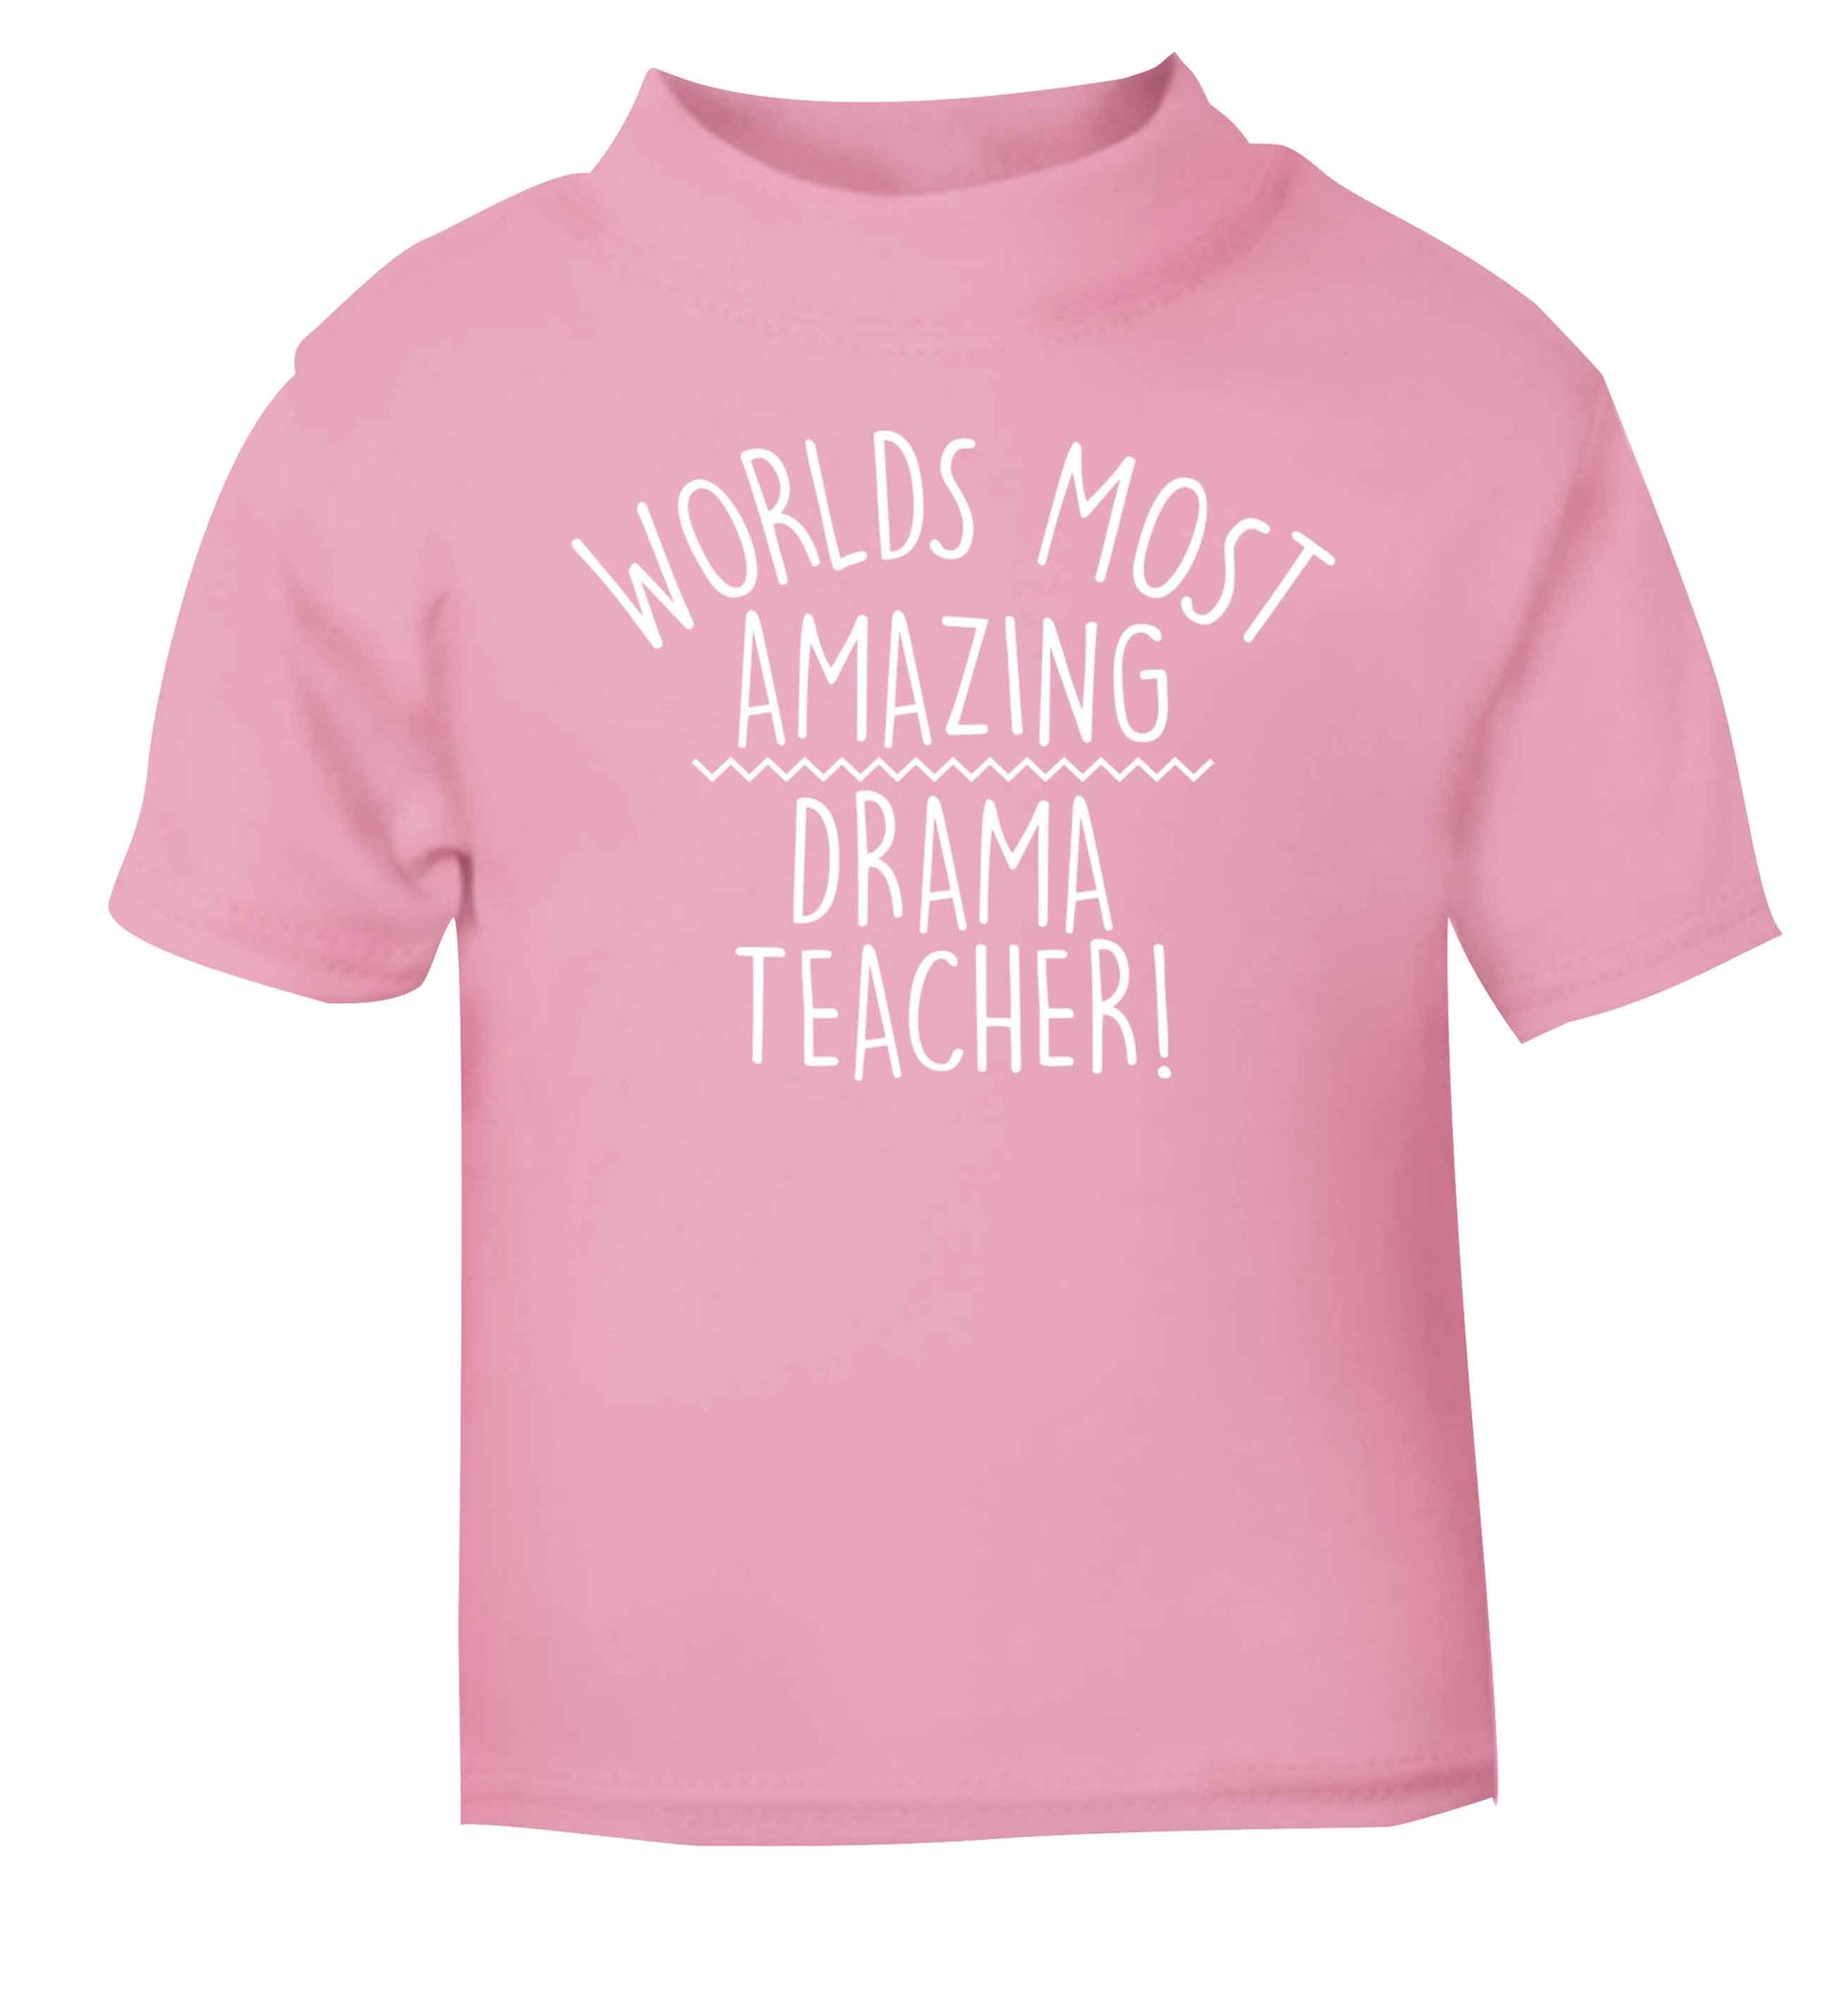 Worlds most amazing drama teacher light pink baby toddler Tshirt 2 Years